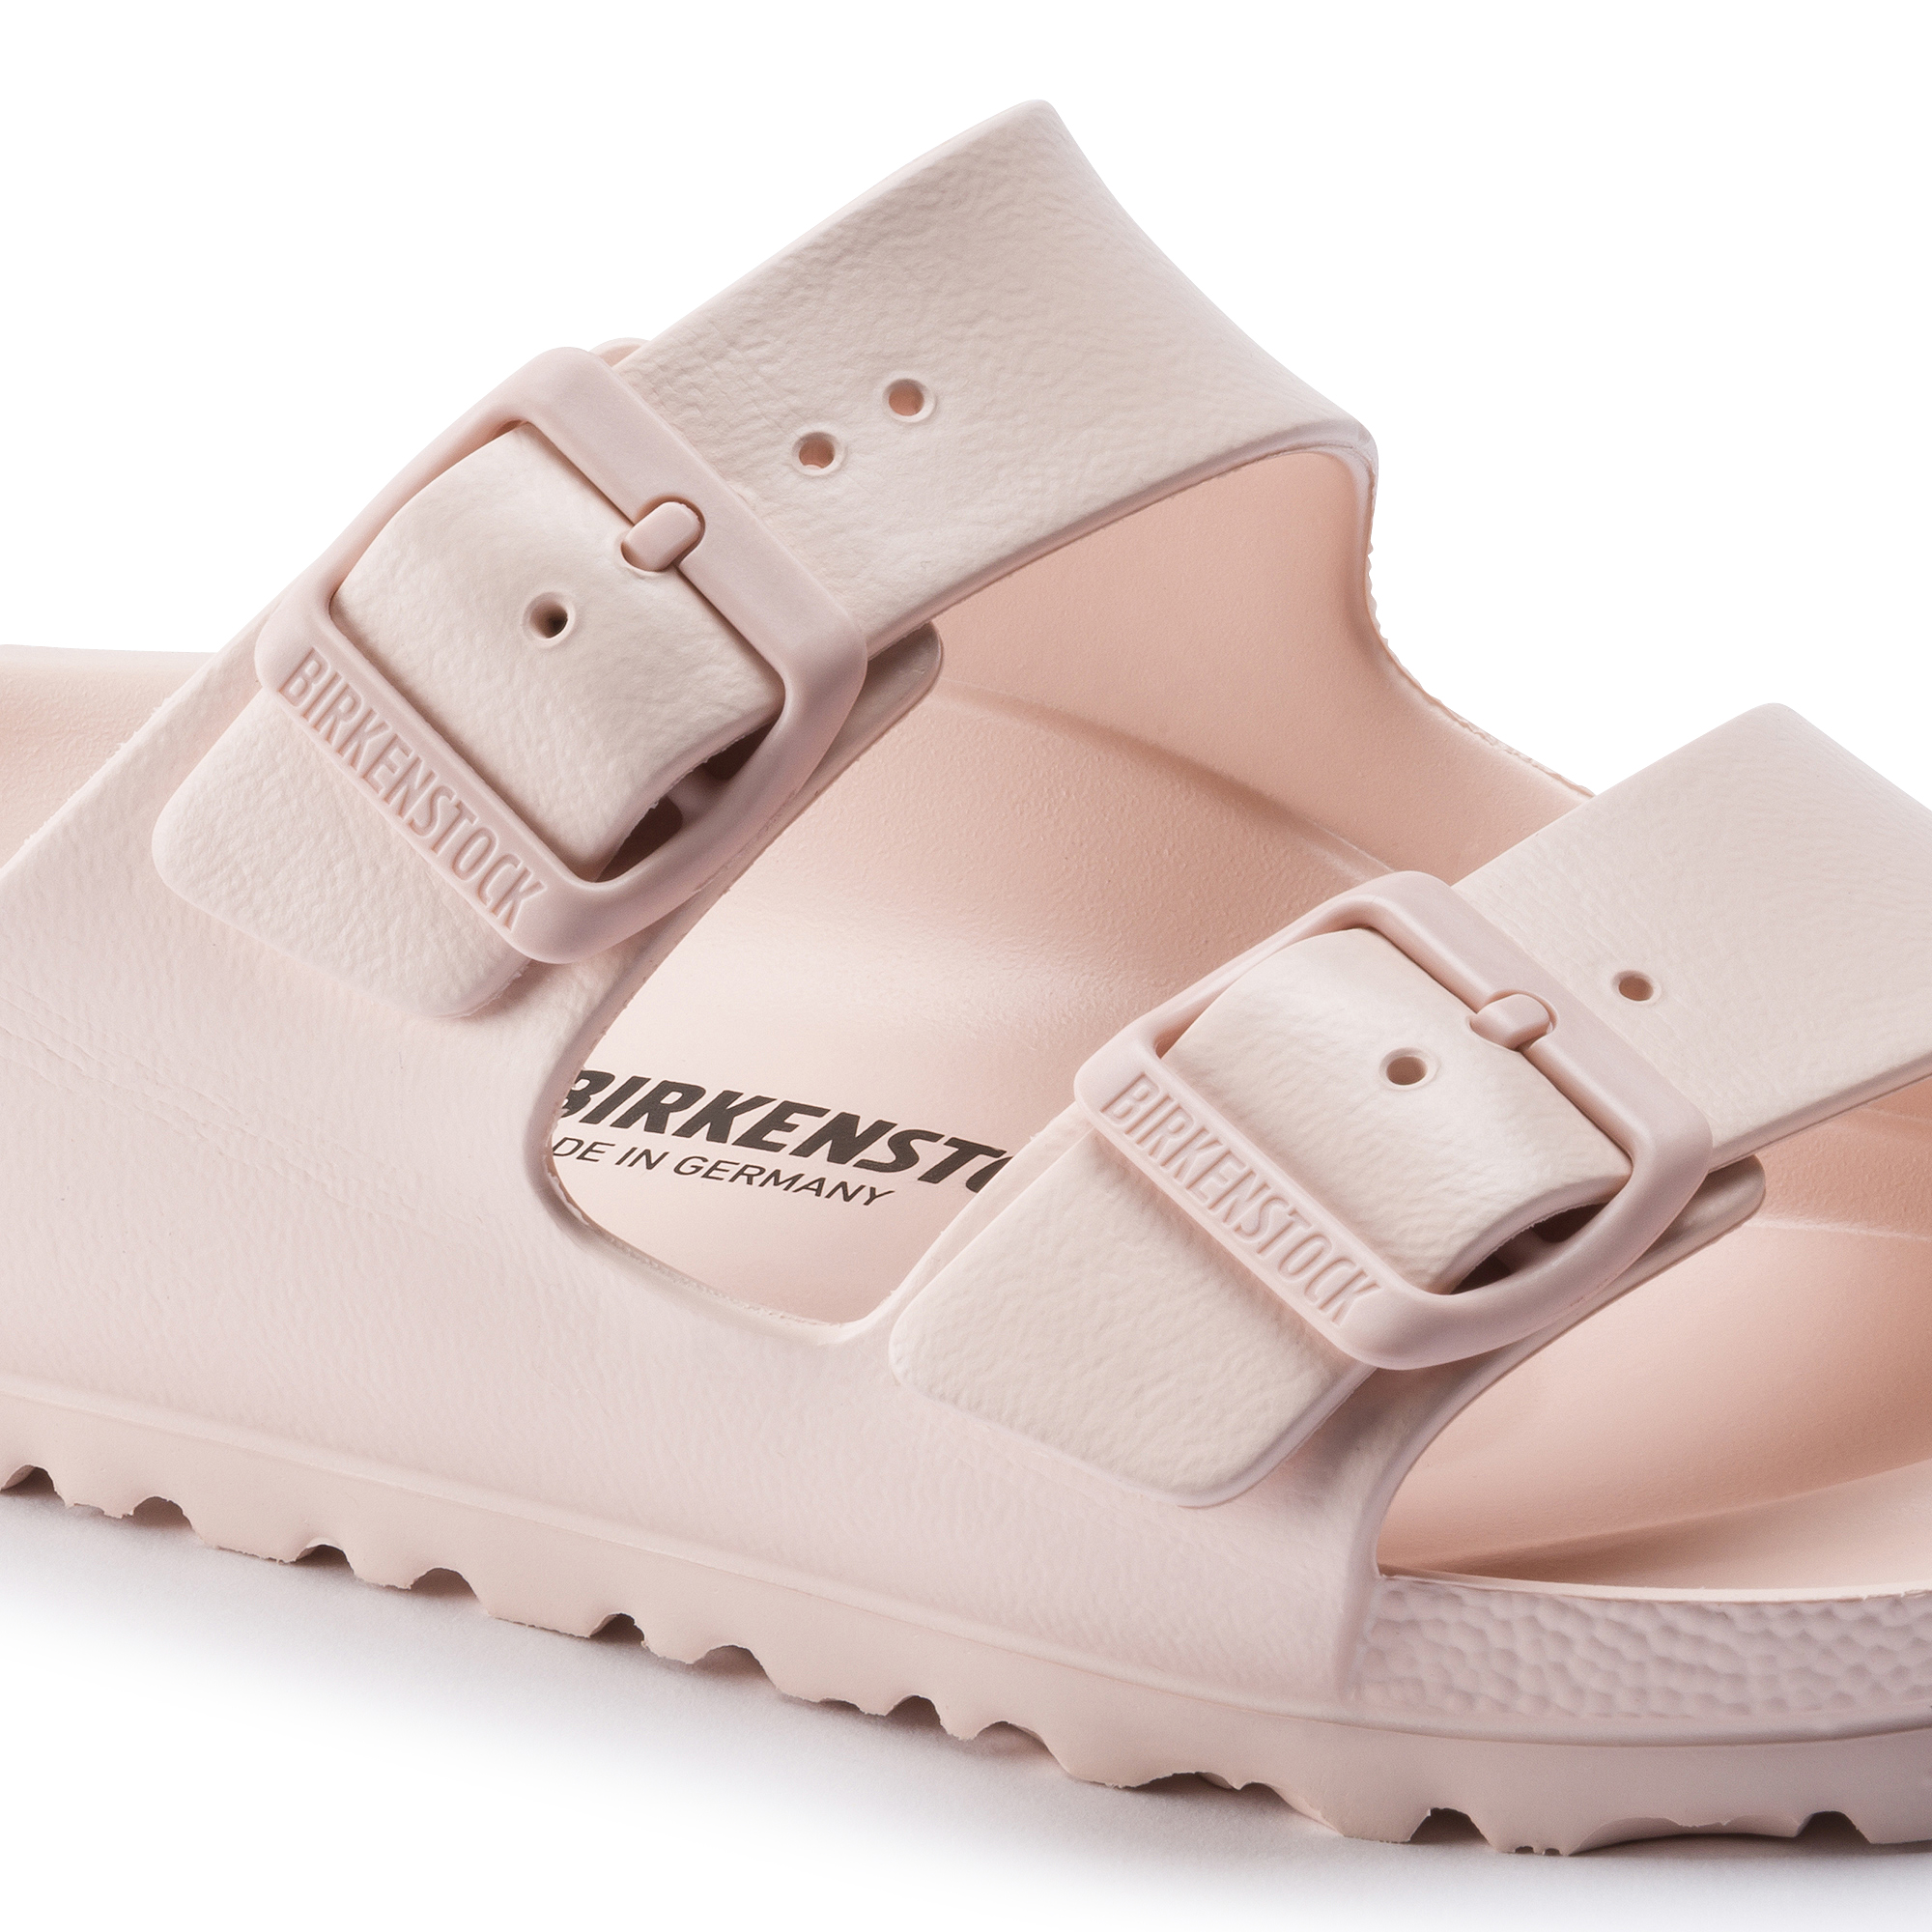 birkenstock women's arizona essentials eva sandals rose